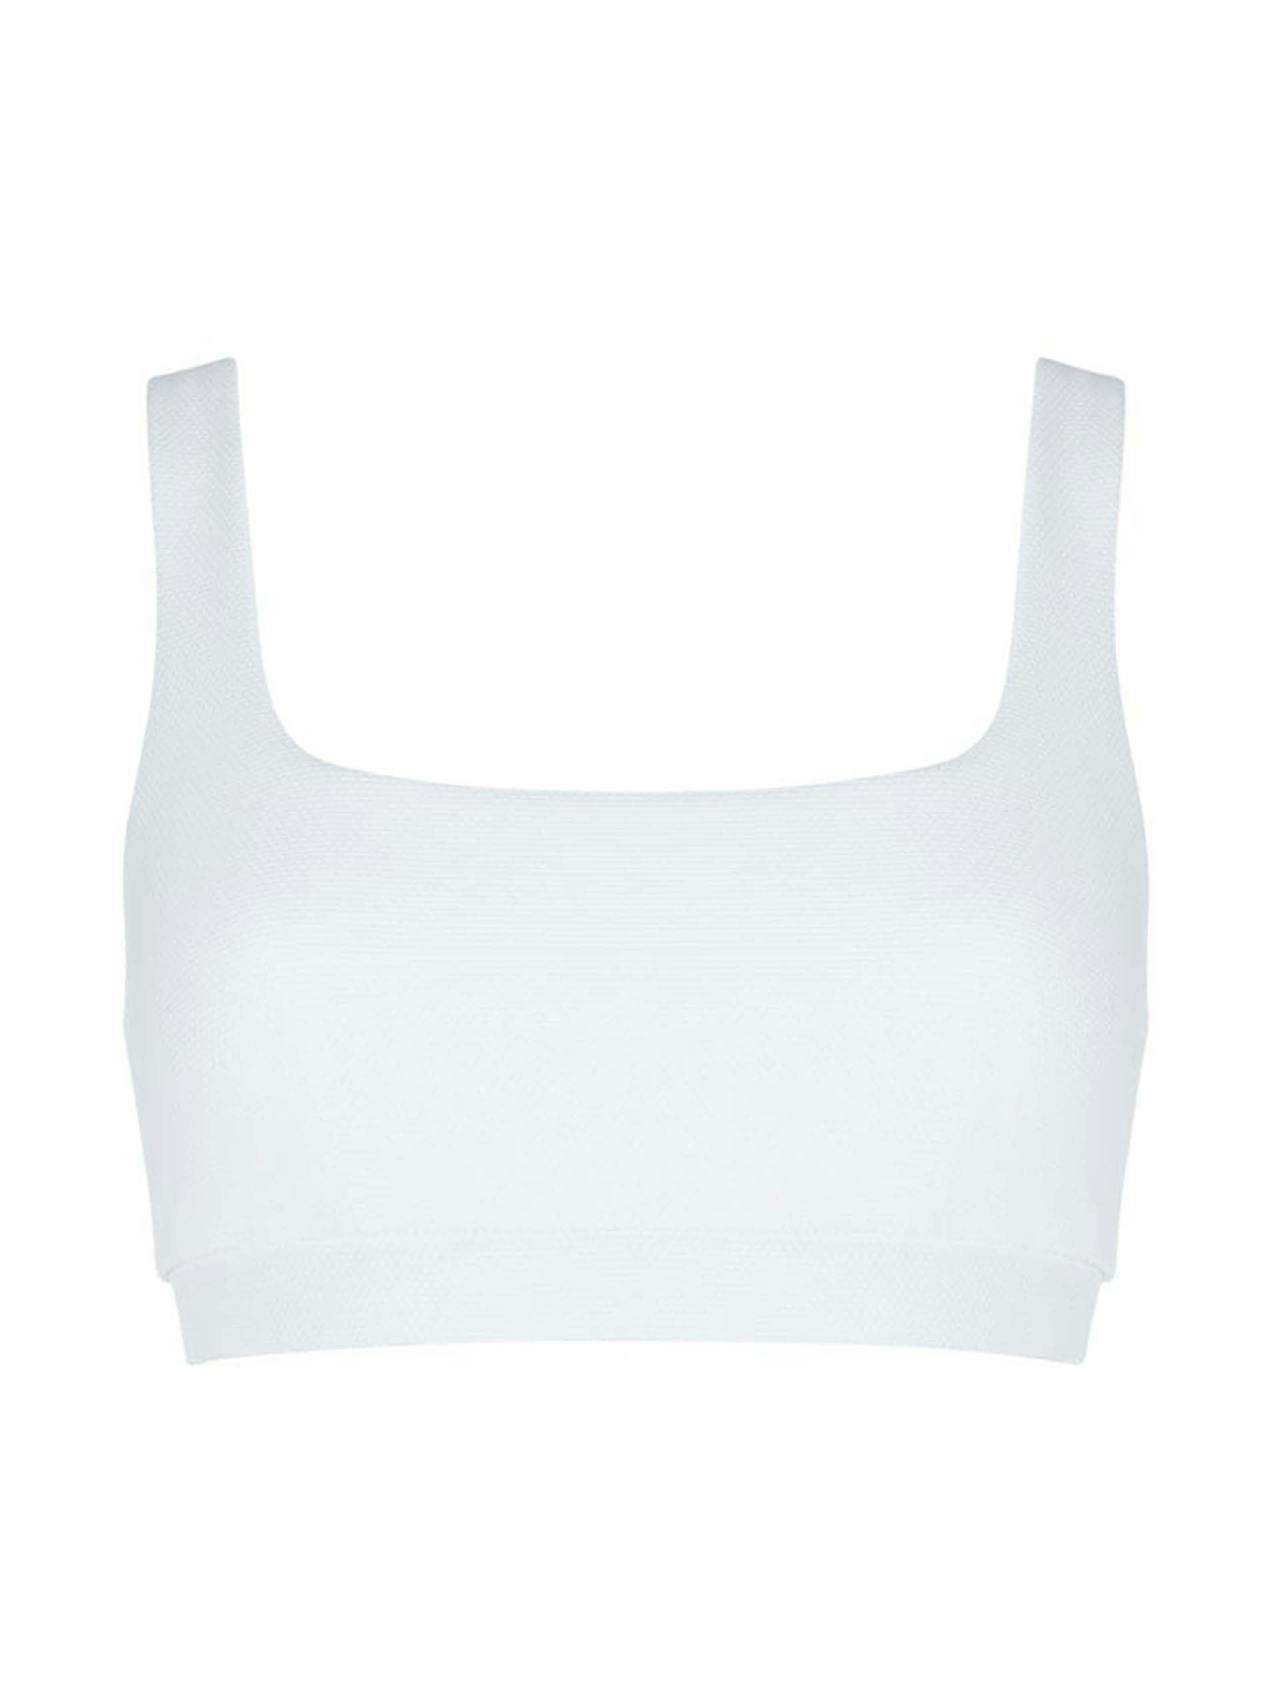 The Gemma white bikini top